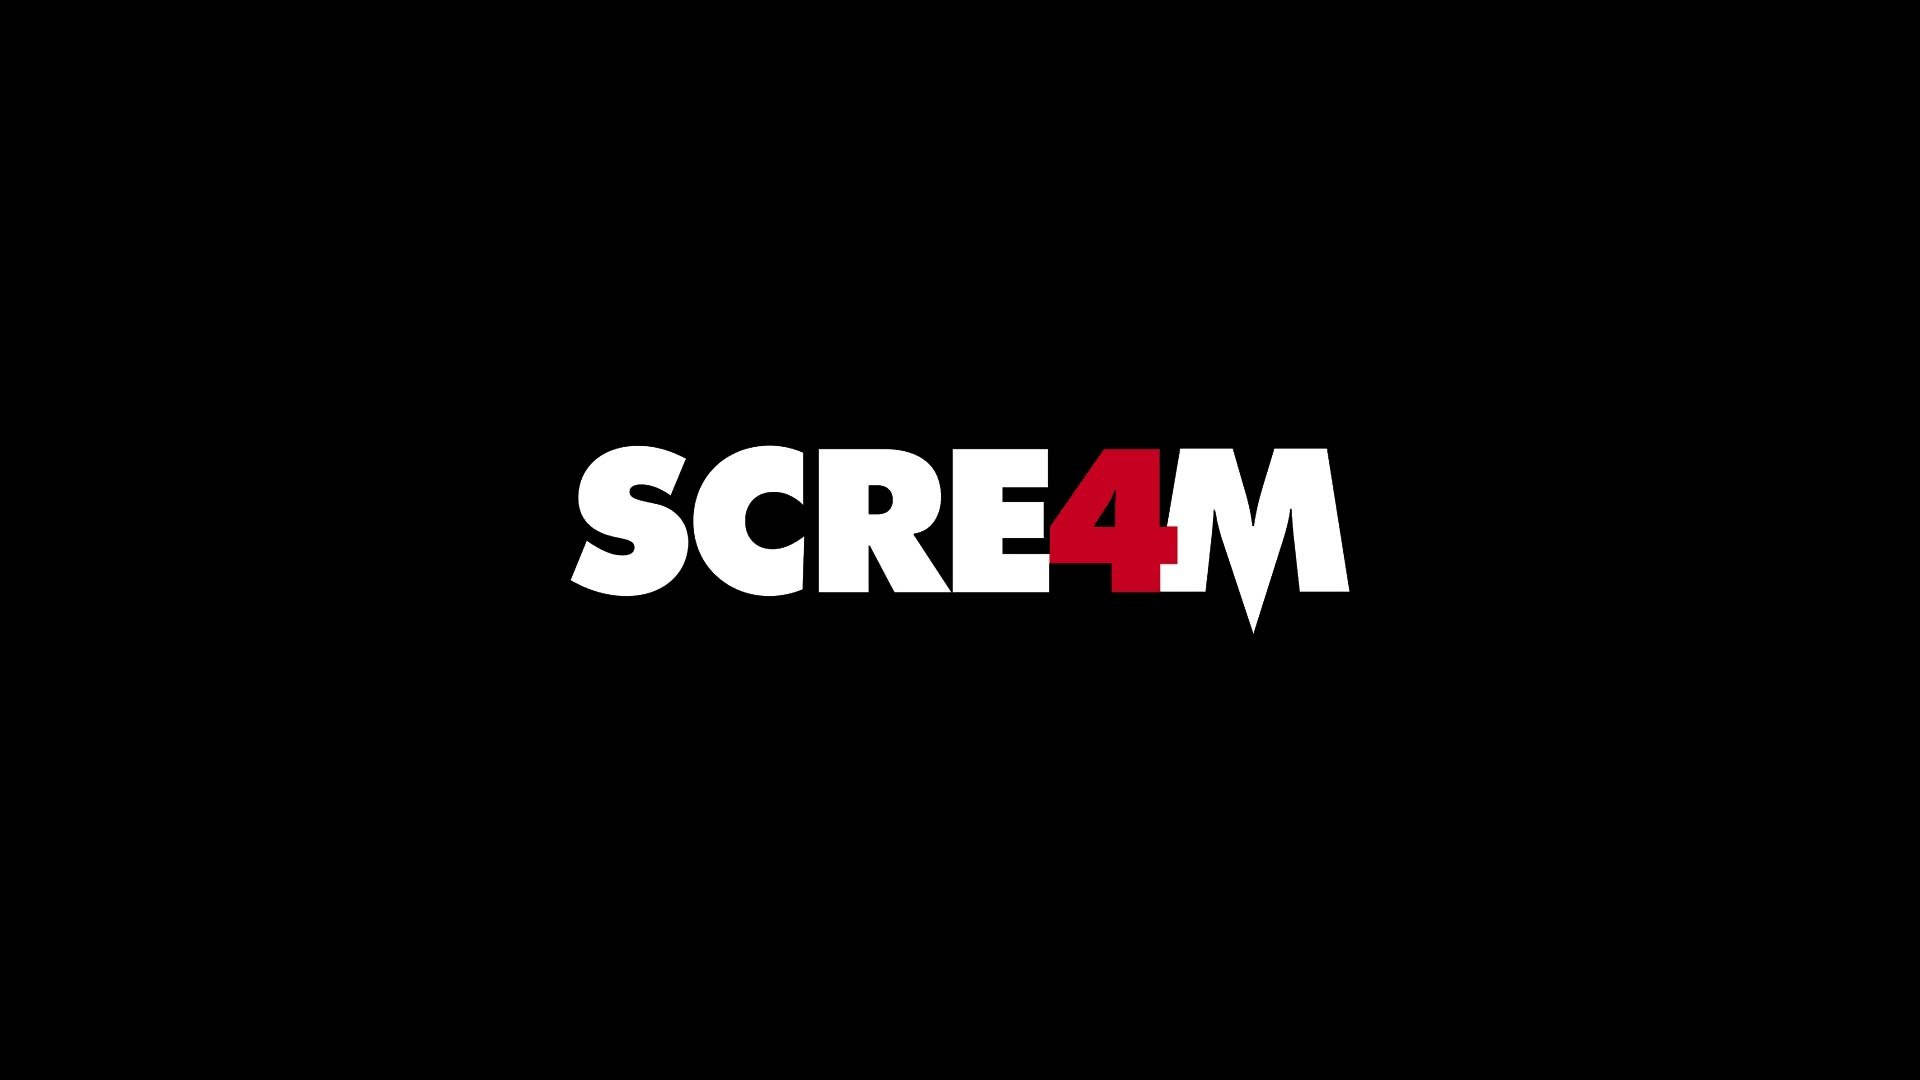 Scream 4 Title Poster Wallpaper